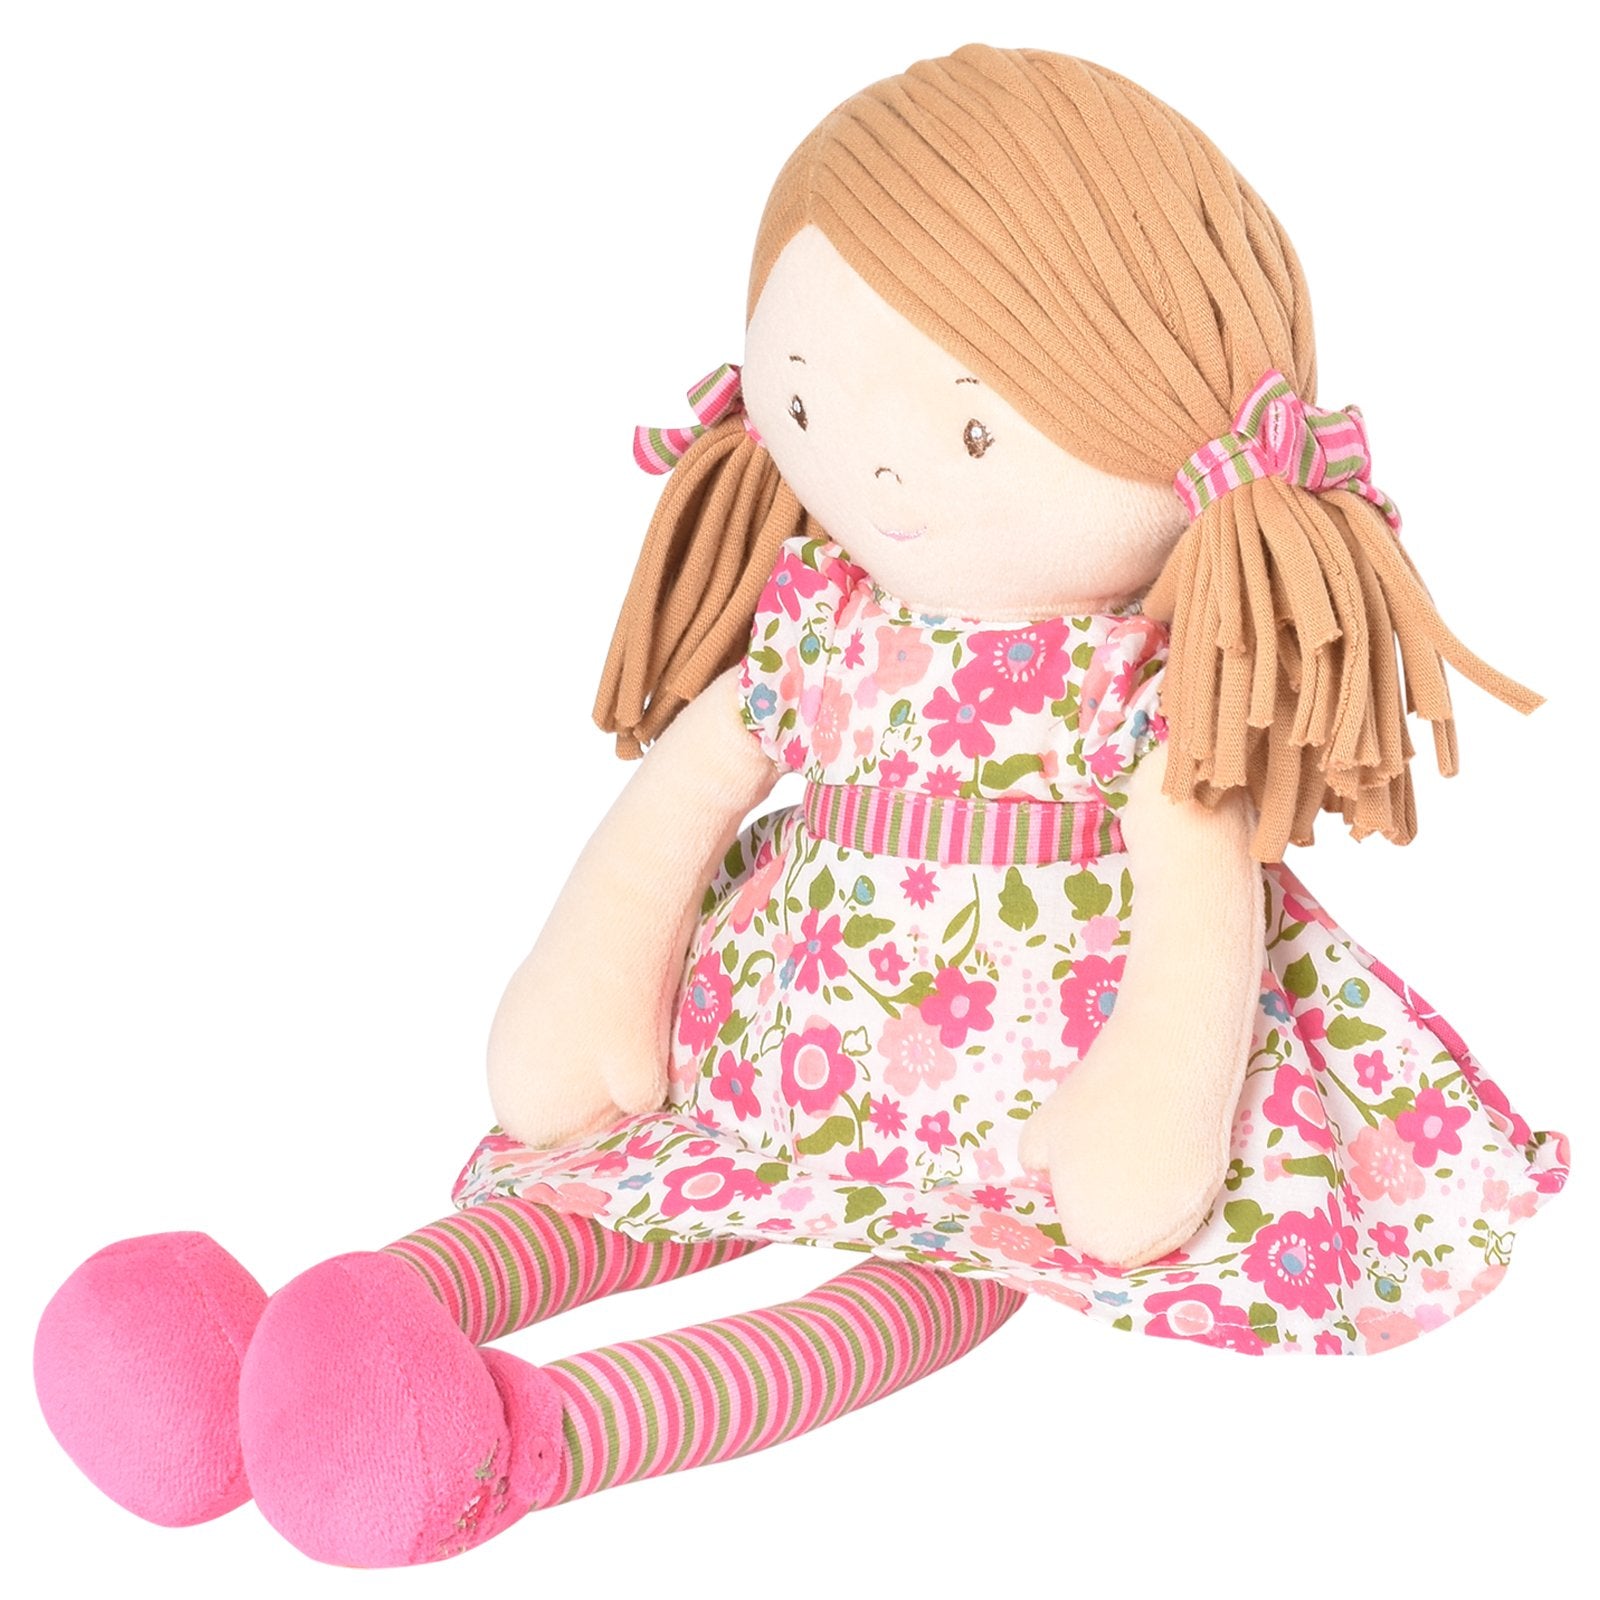 Bonikka Fran Doll in Pink & Green Dress